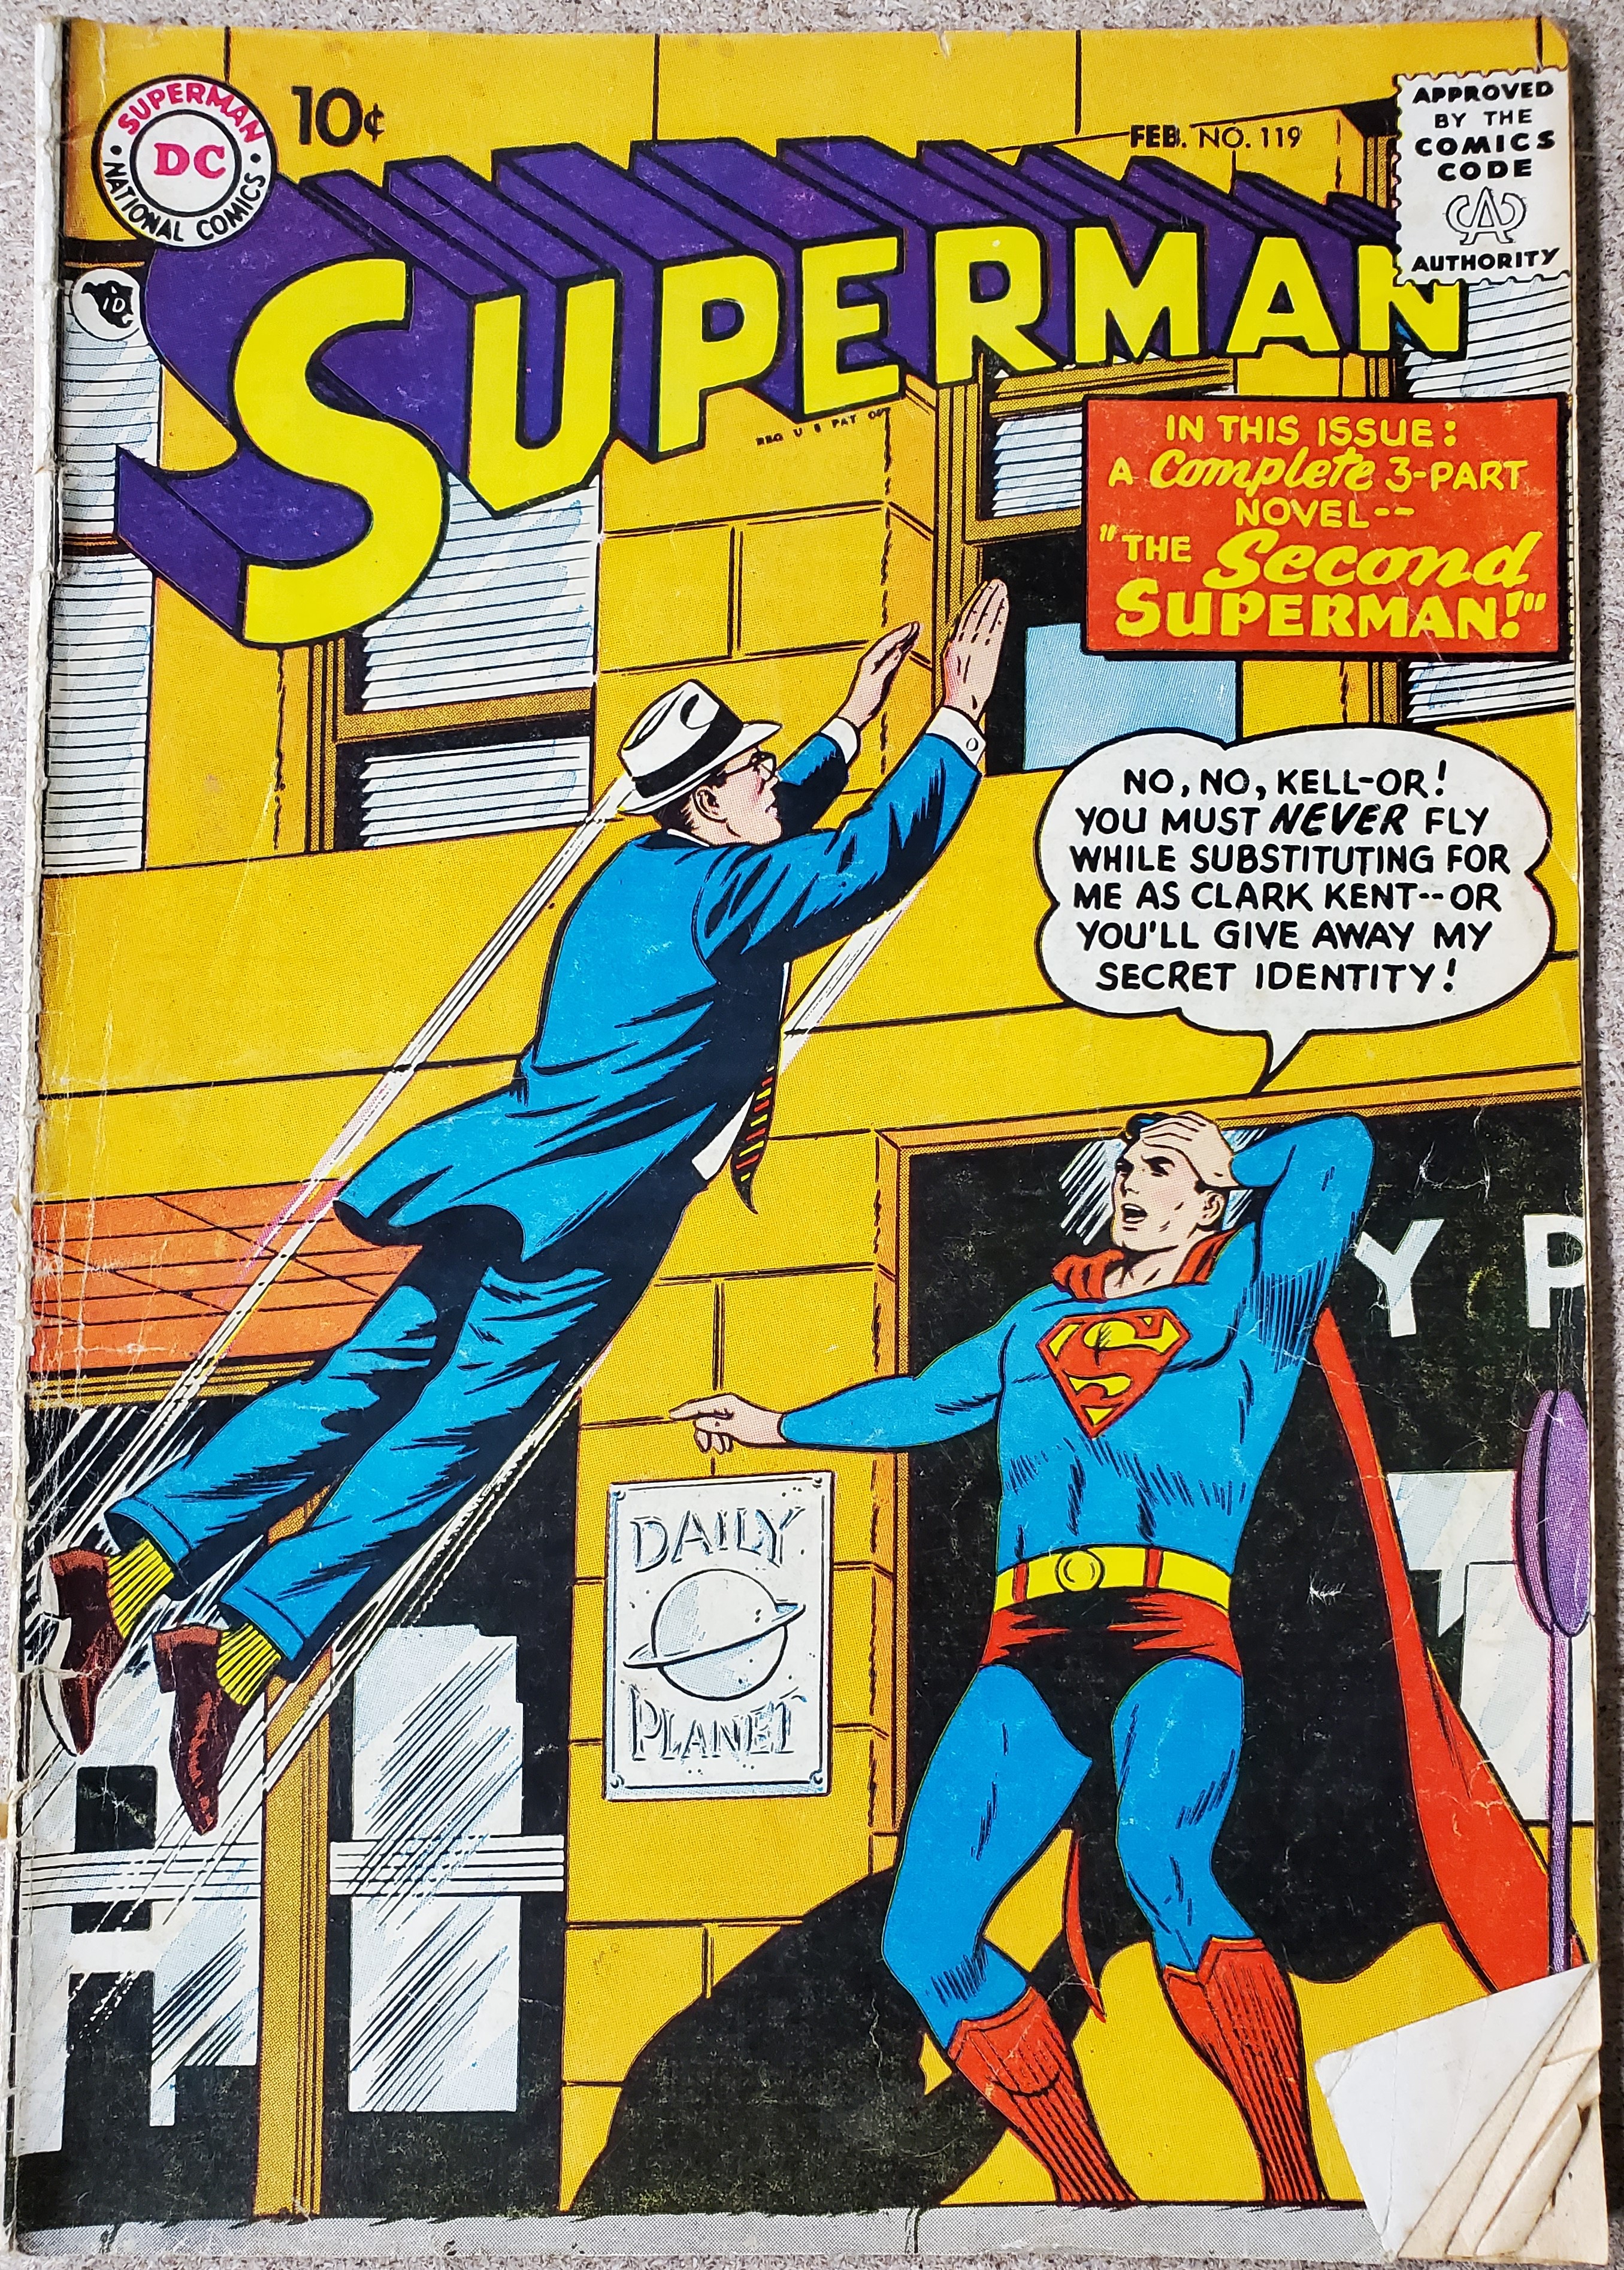 Superman #119(1939)-Good (1.8 – 3)